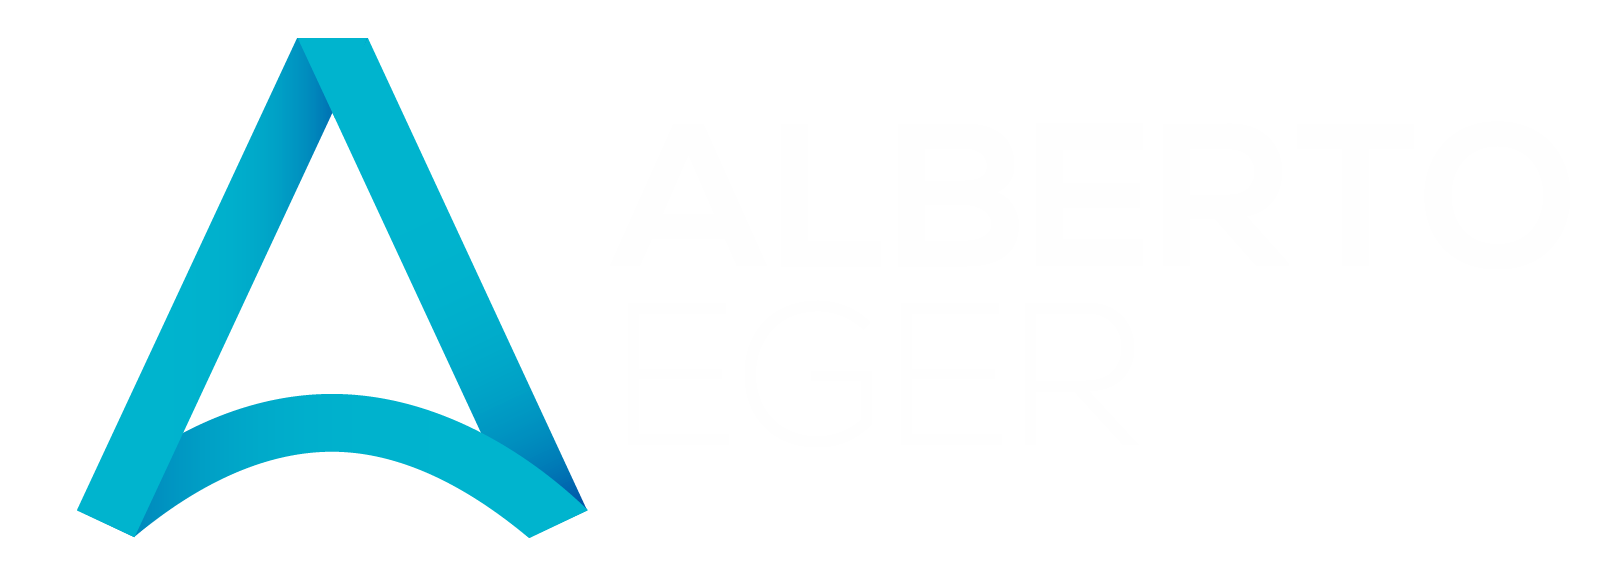 Alberto Eger